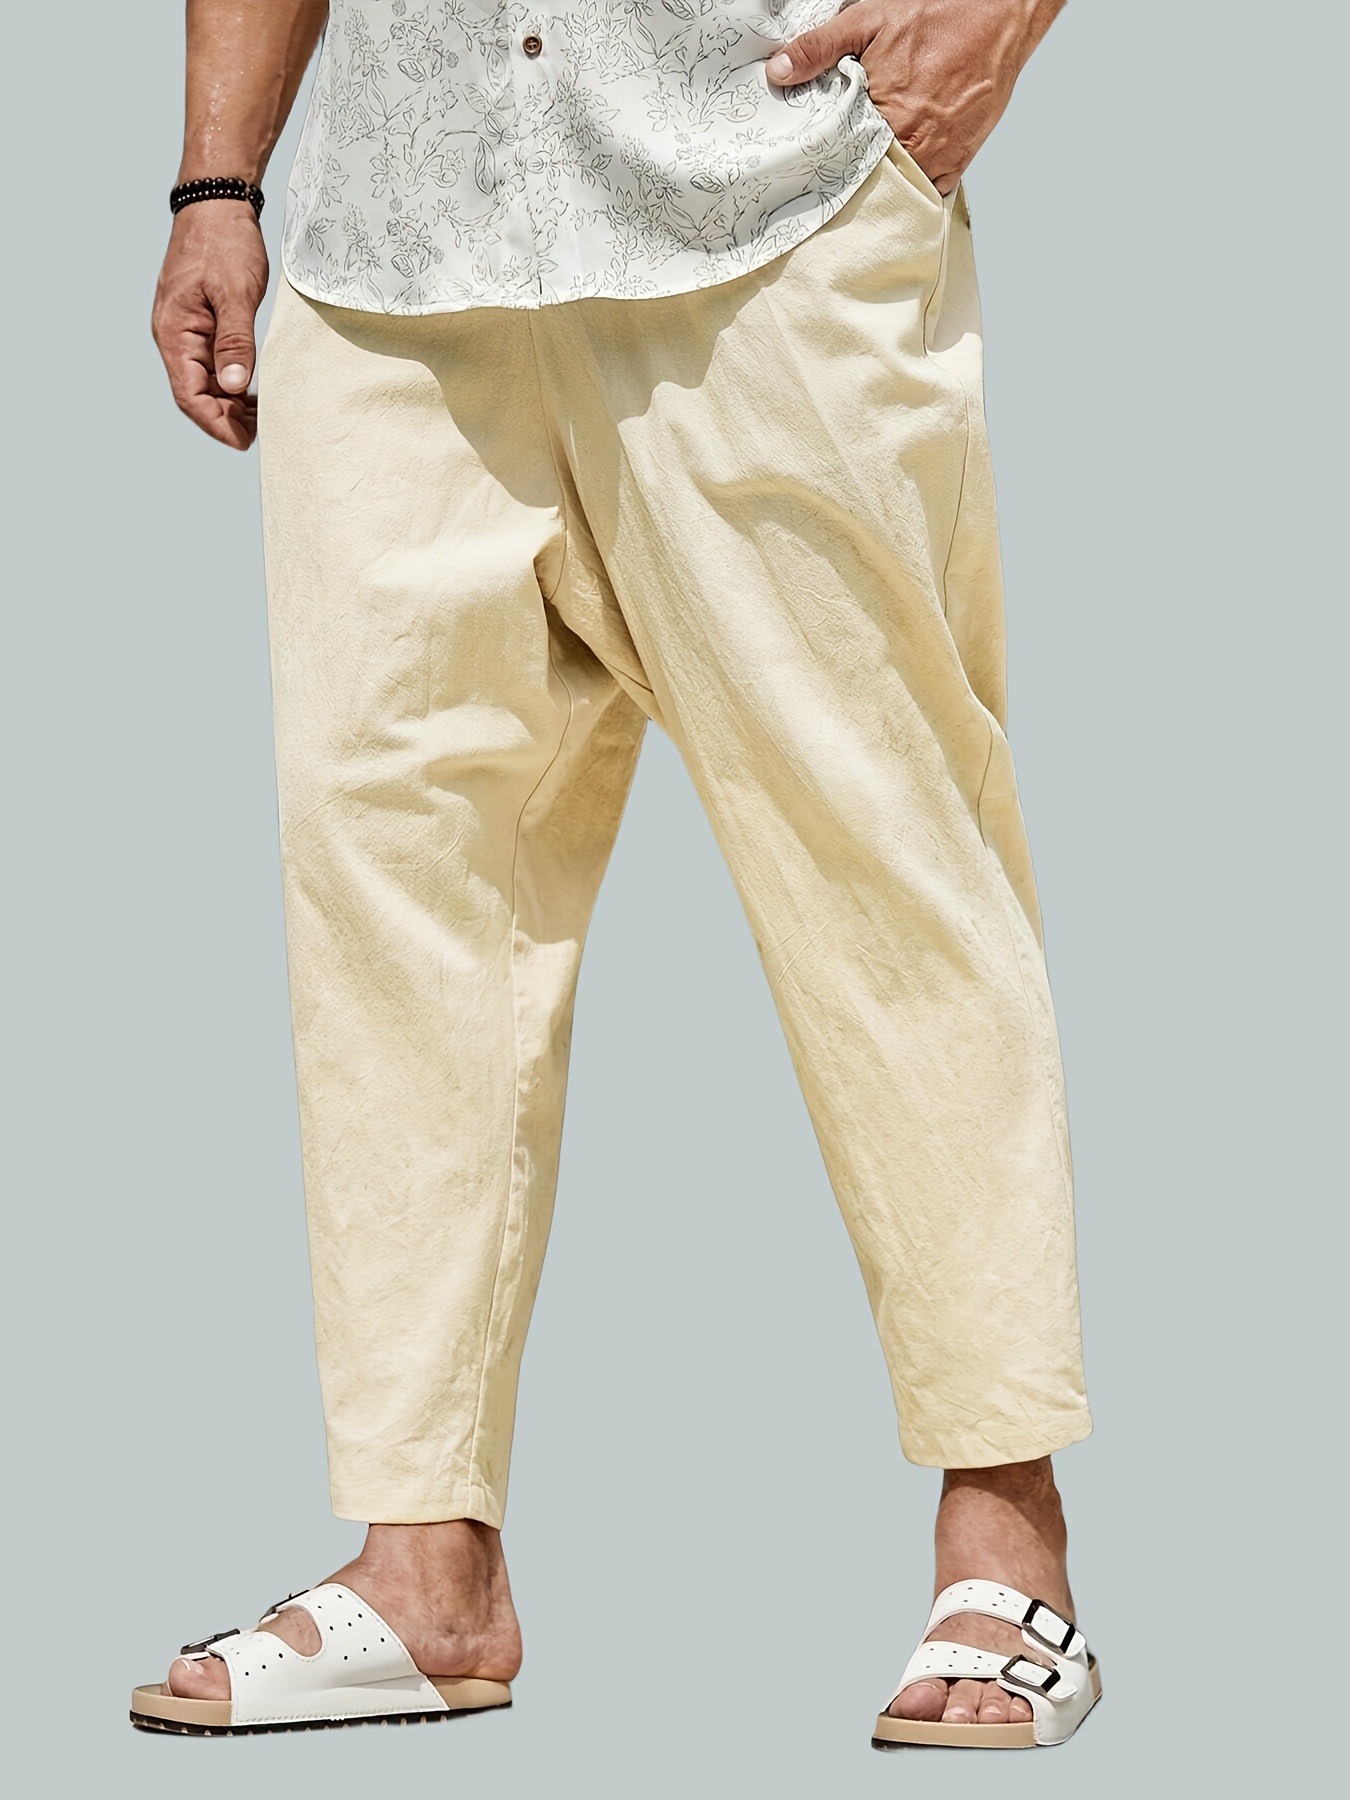 Pantalones bombachos para hombre talla única - Jaime Trillos Yoga